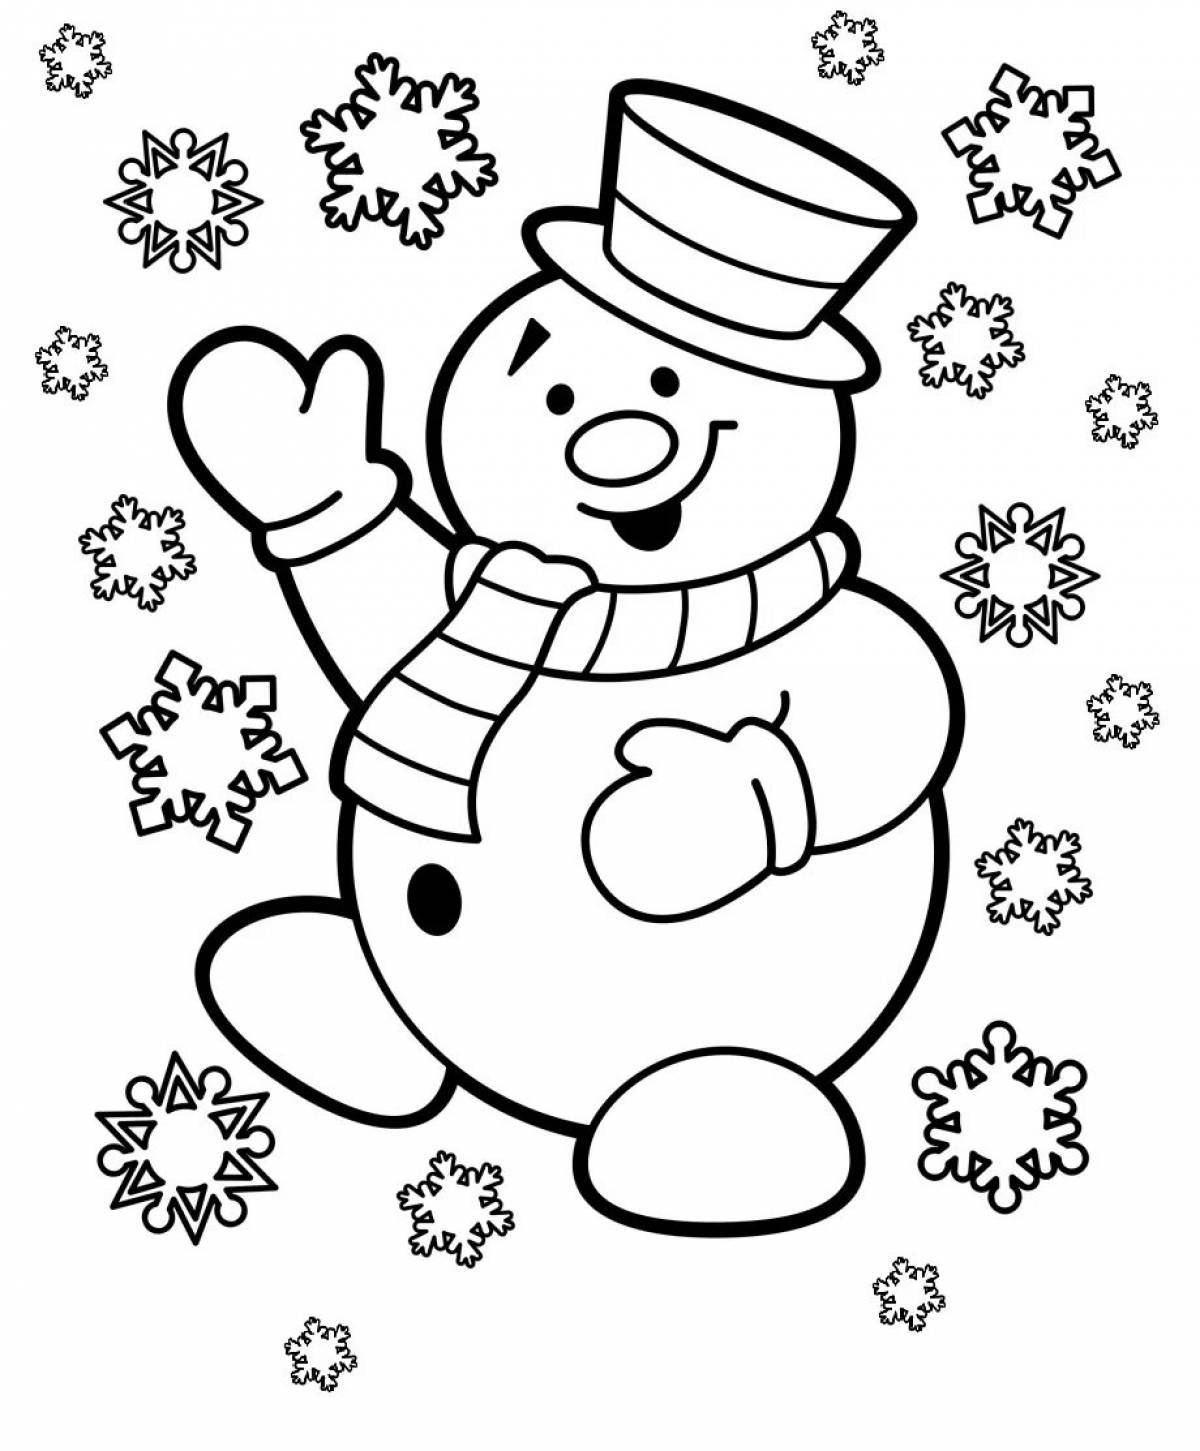 Glorious snowman coloring postcard